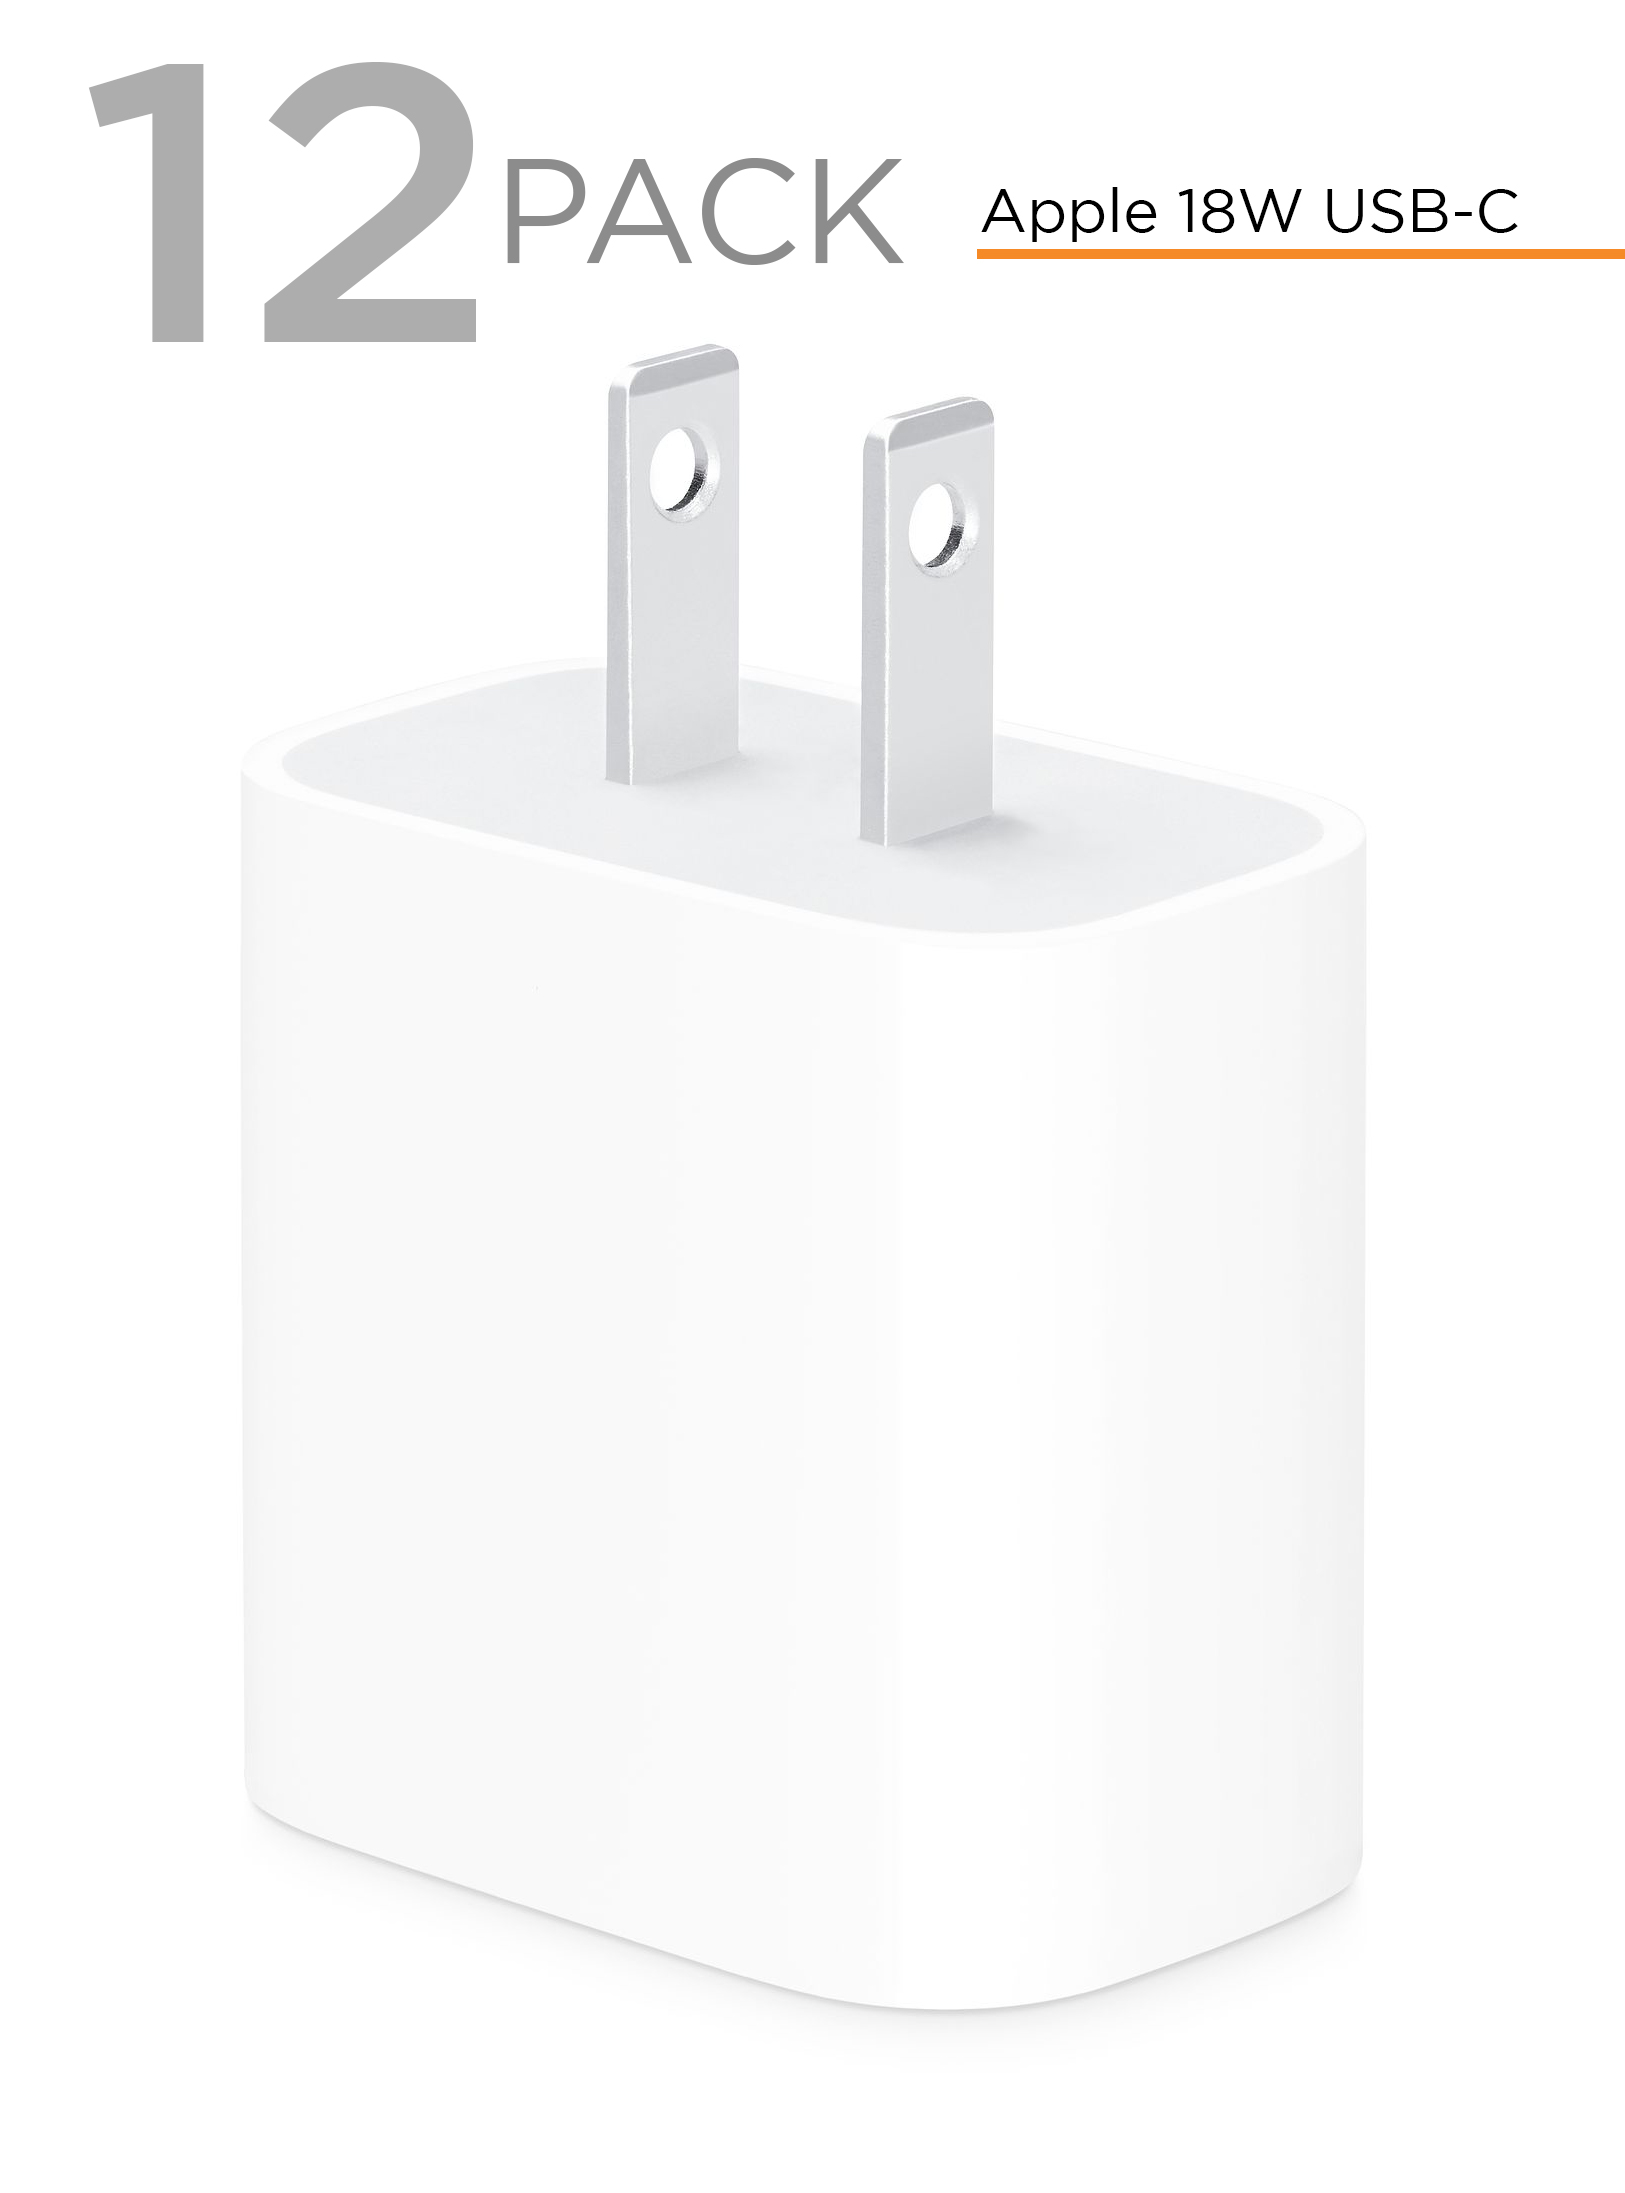 Apple Original 18W USB-C Power Adapters - 12 Pack